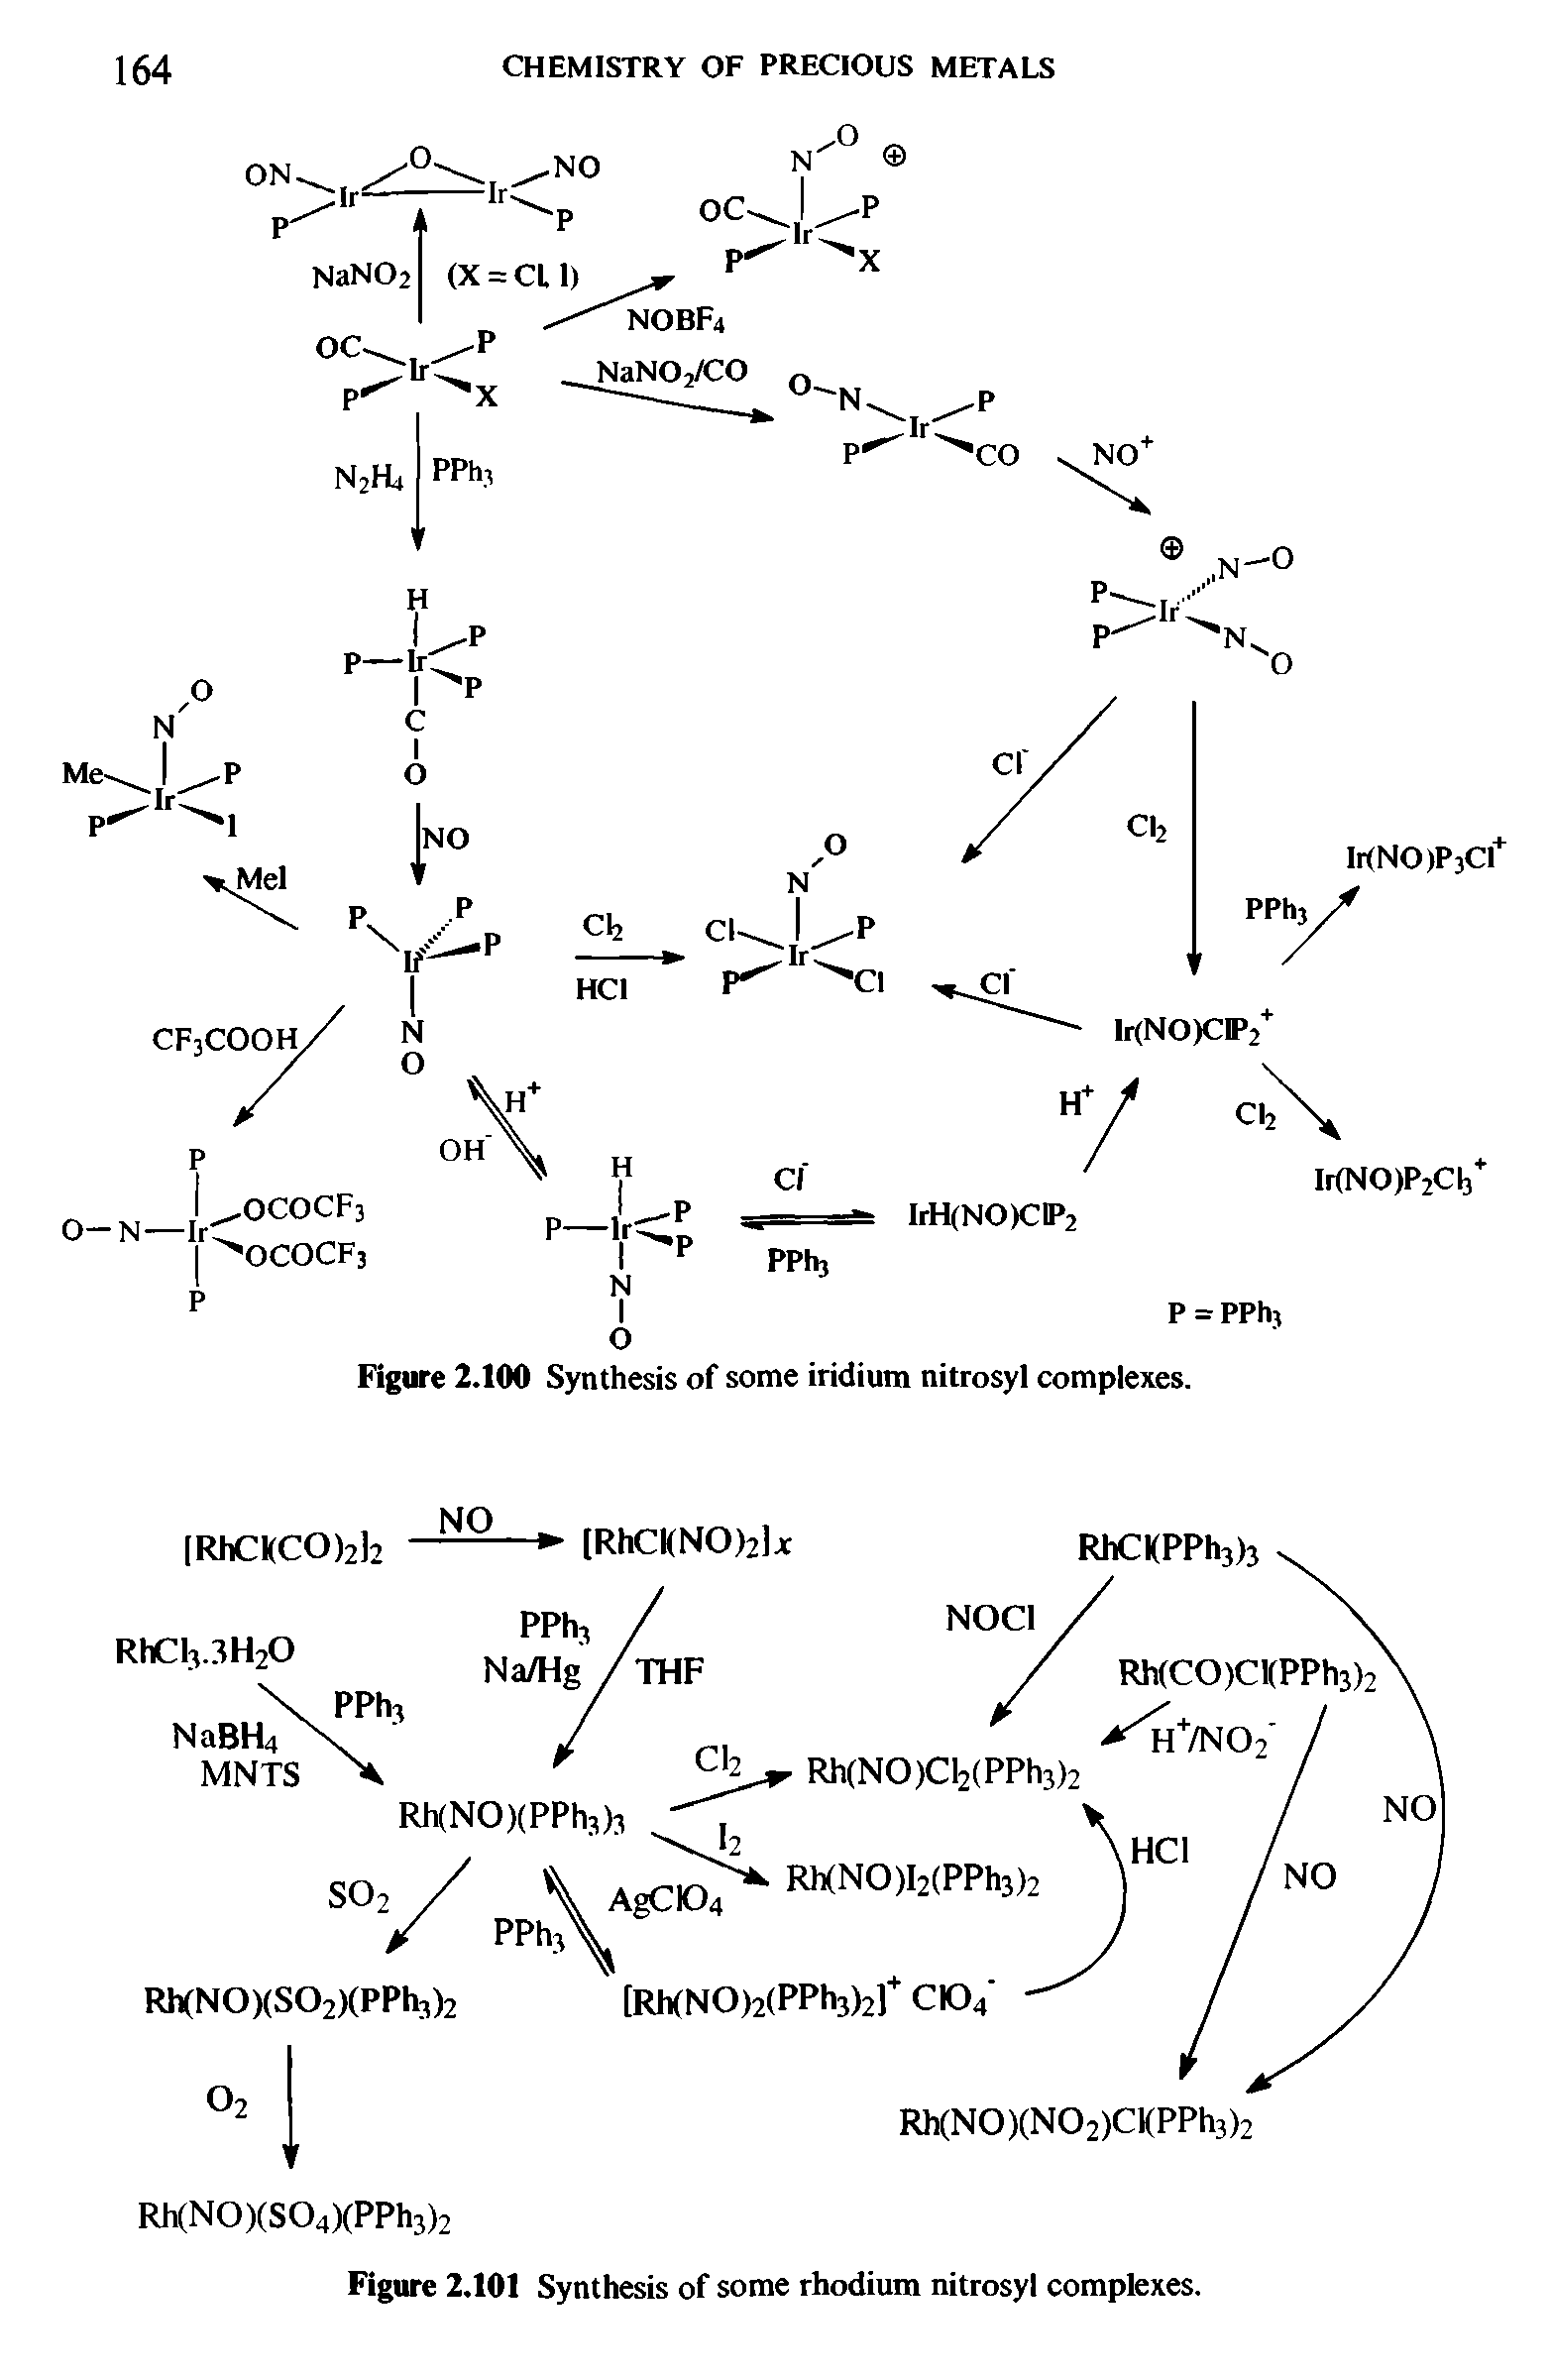 Figure 2.100 Synthesis of some iridium nitrosyl complexes.